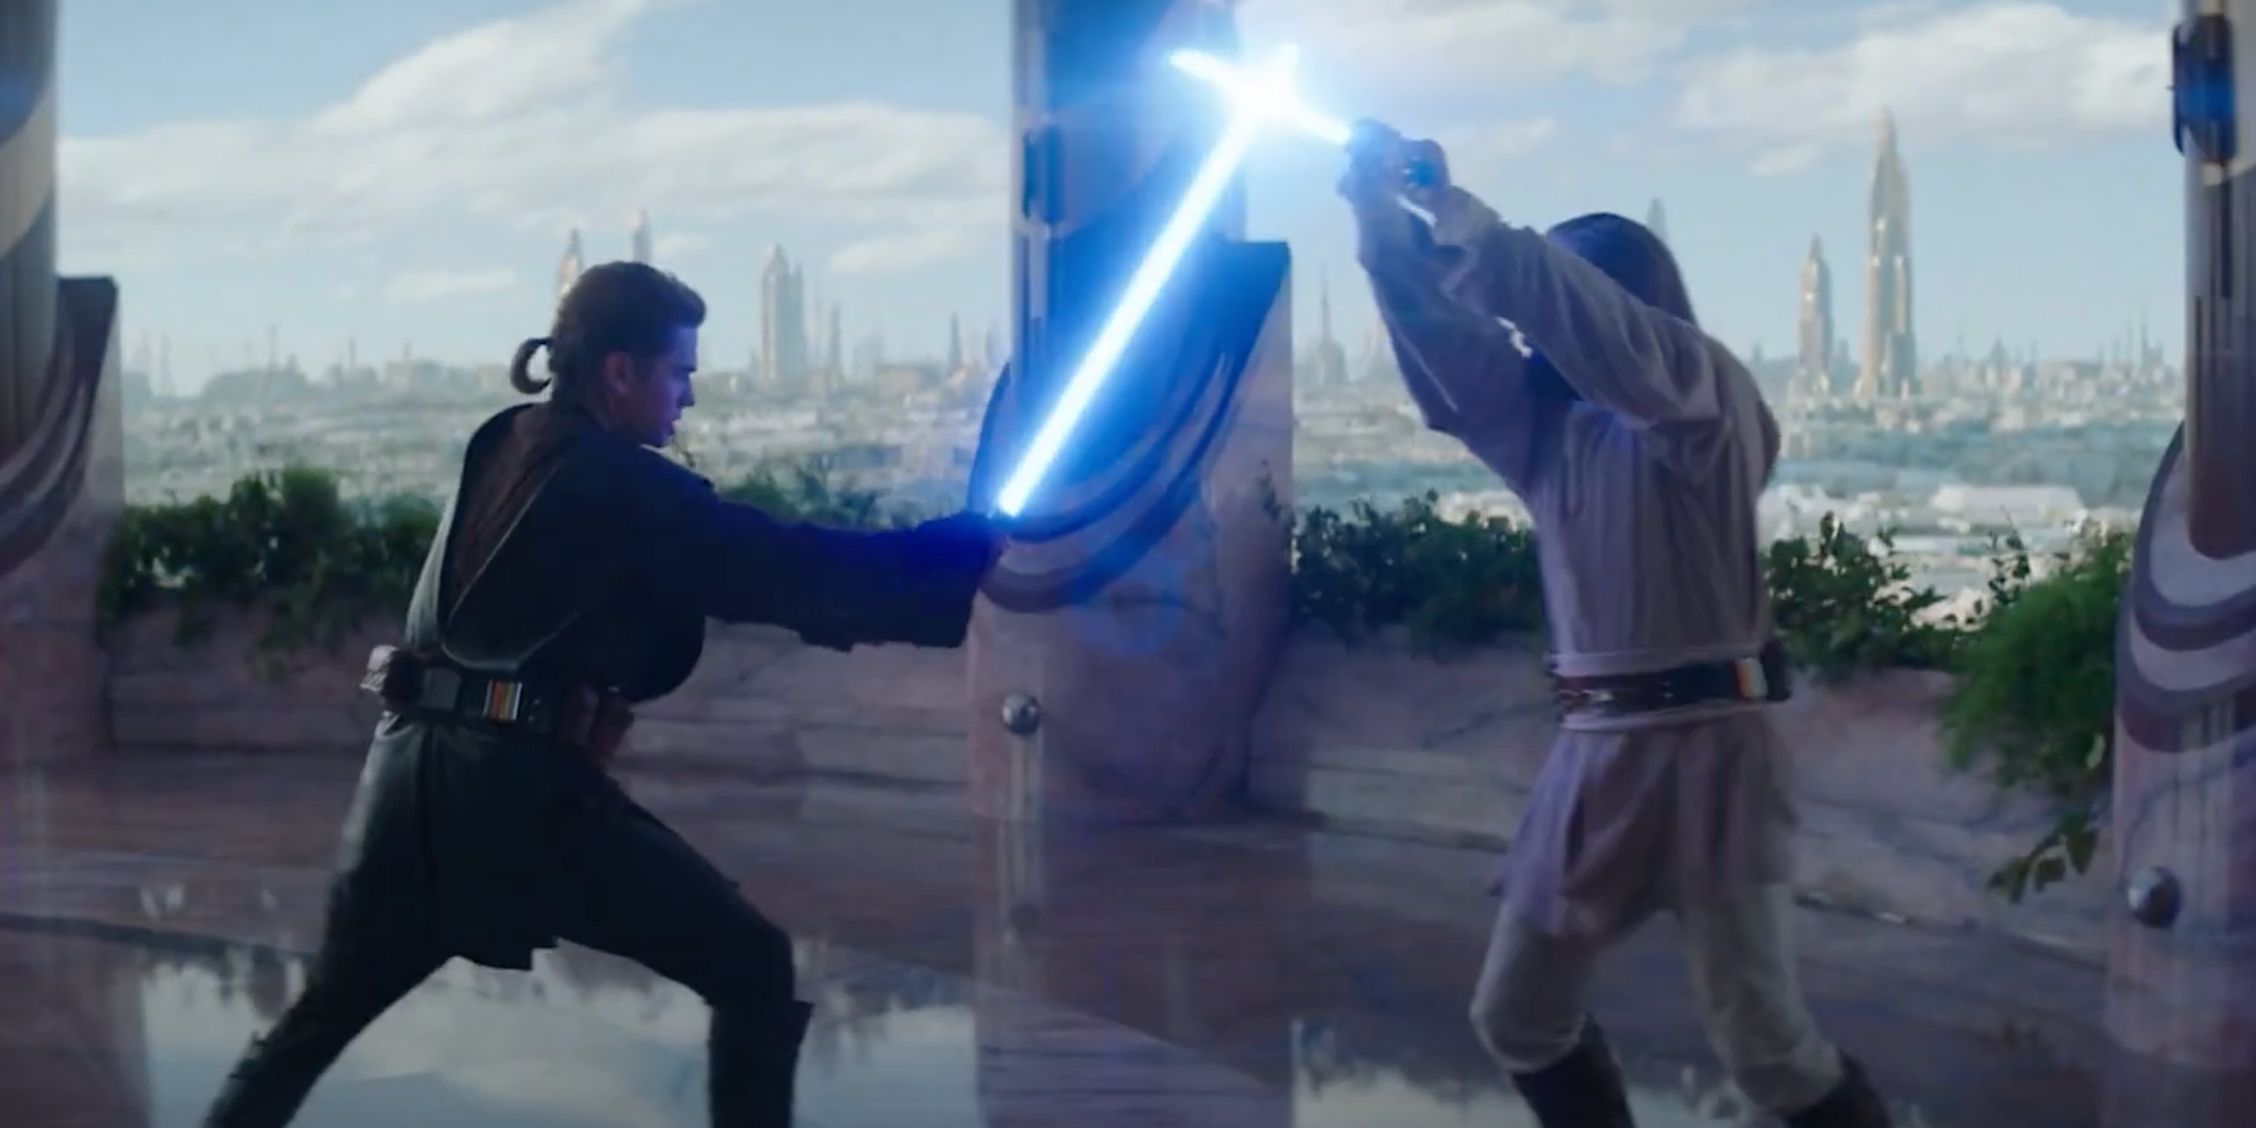 Anakin Skywalker and Obi-Wan Kenobi training with lightsabers